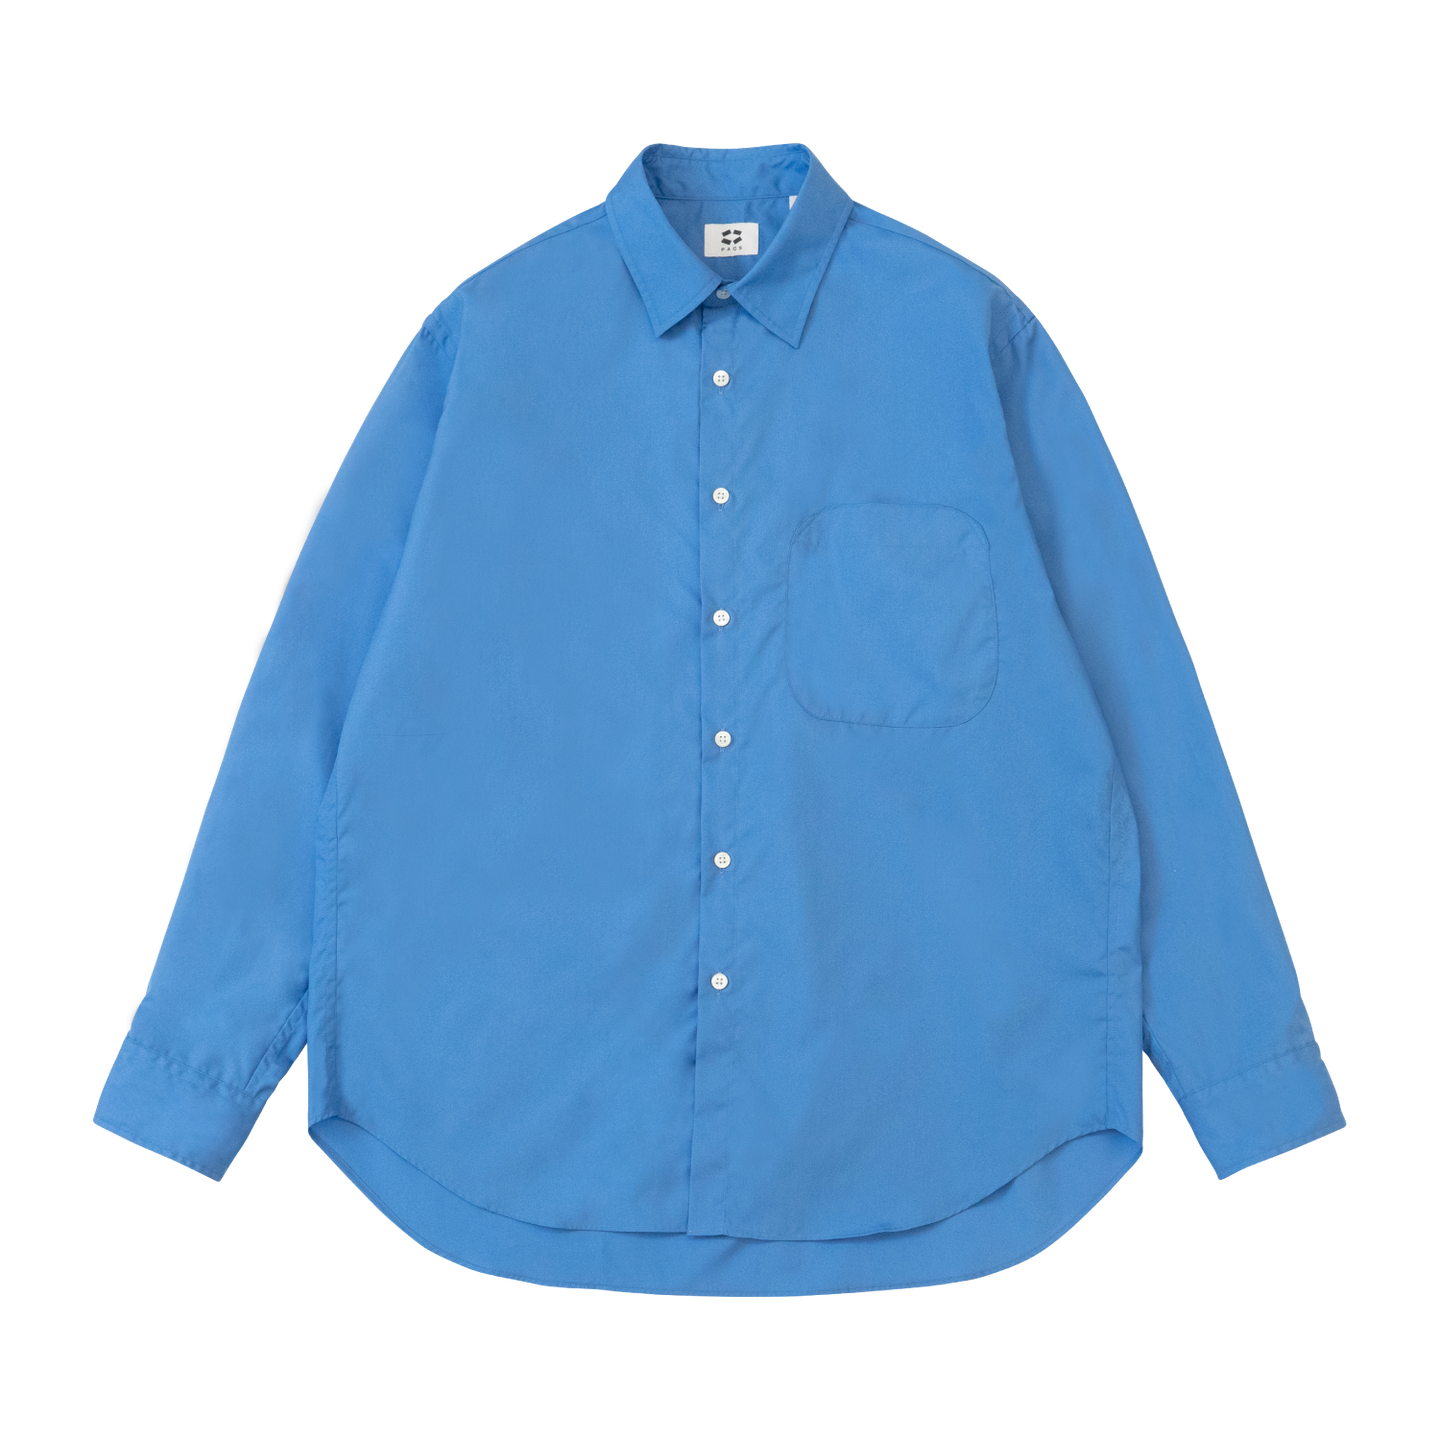 Round Corner Pocket Shirts (Blue) - P A C S